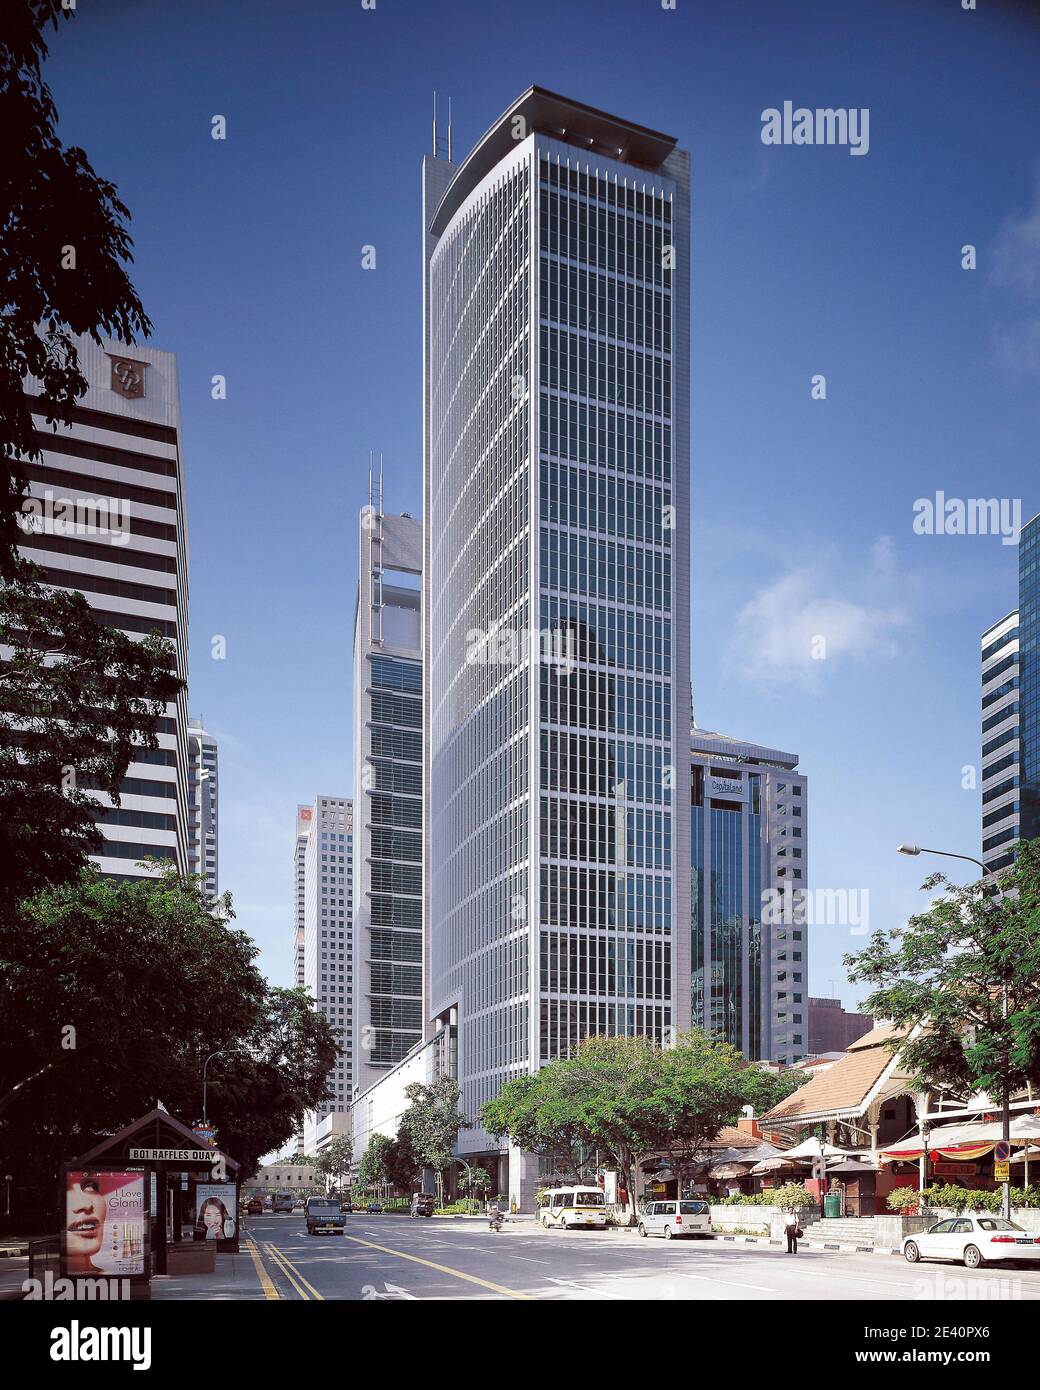 DOM026, SGX centres Singapore, Kohn, Pedersen Fox, hochhaus, high-rise building, multi-story building, grattacielo, rascacielos, SGX centres Singapore Stock Photo